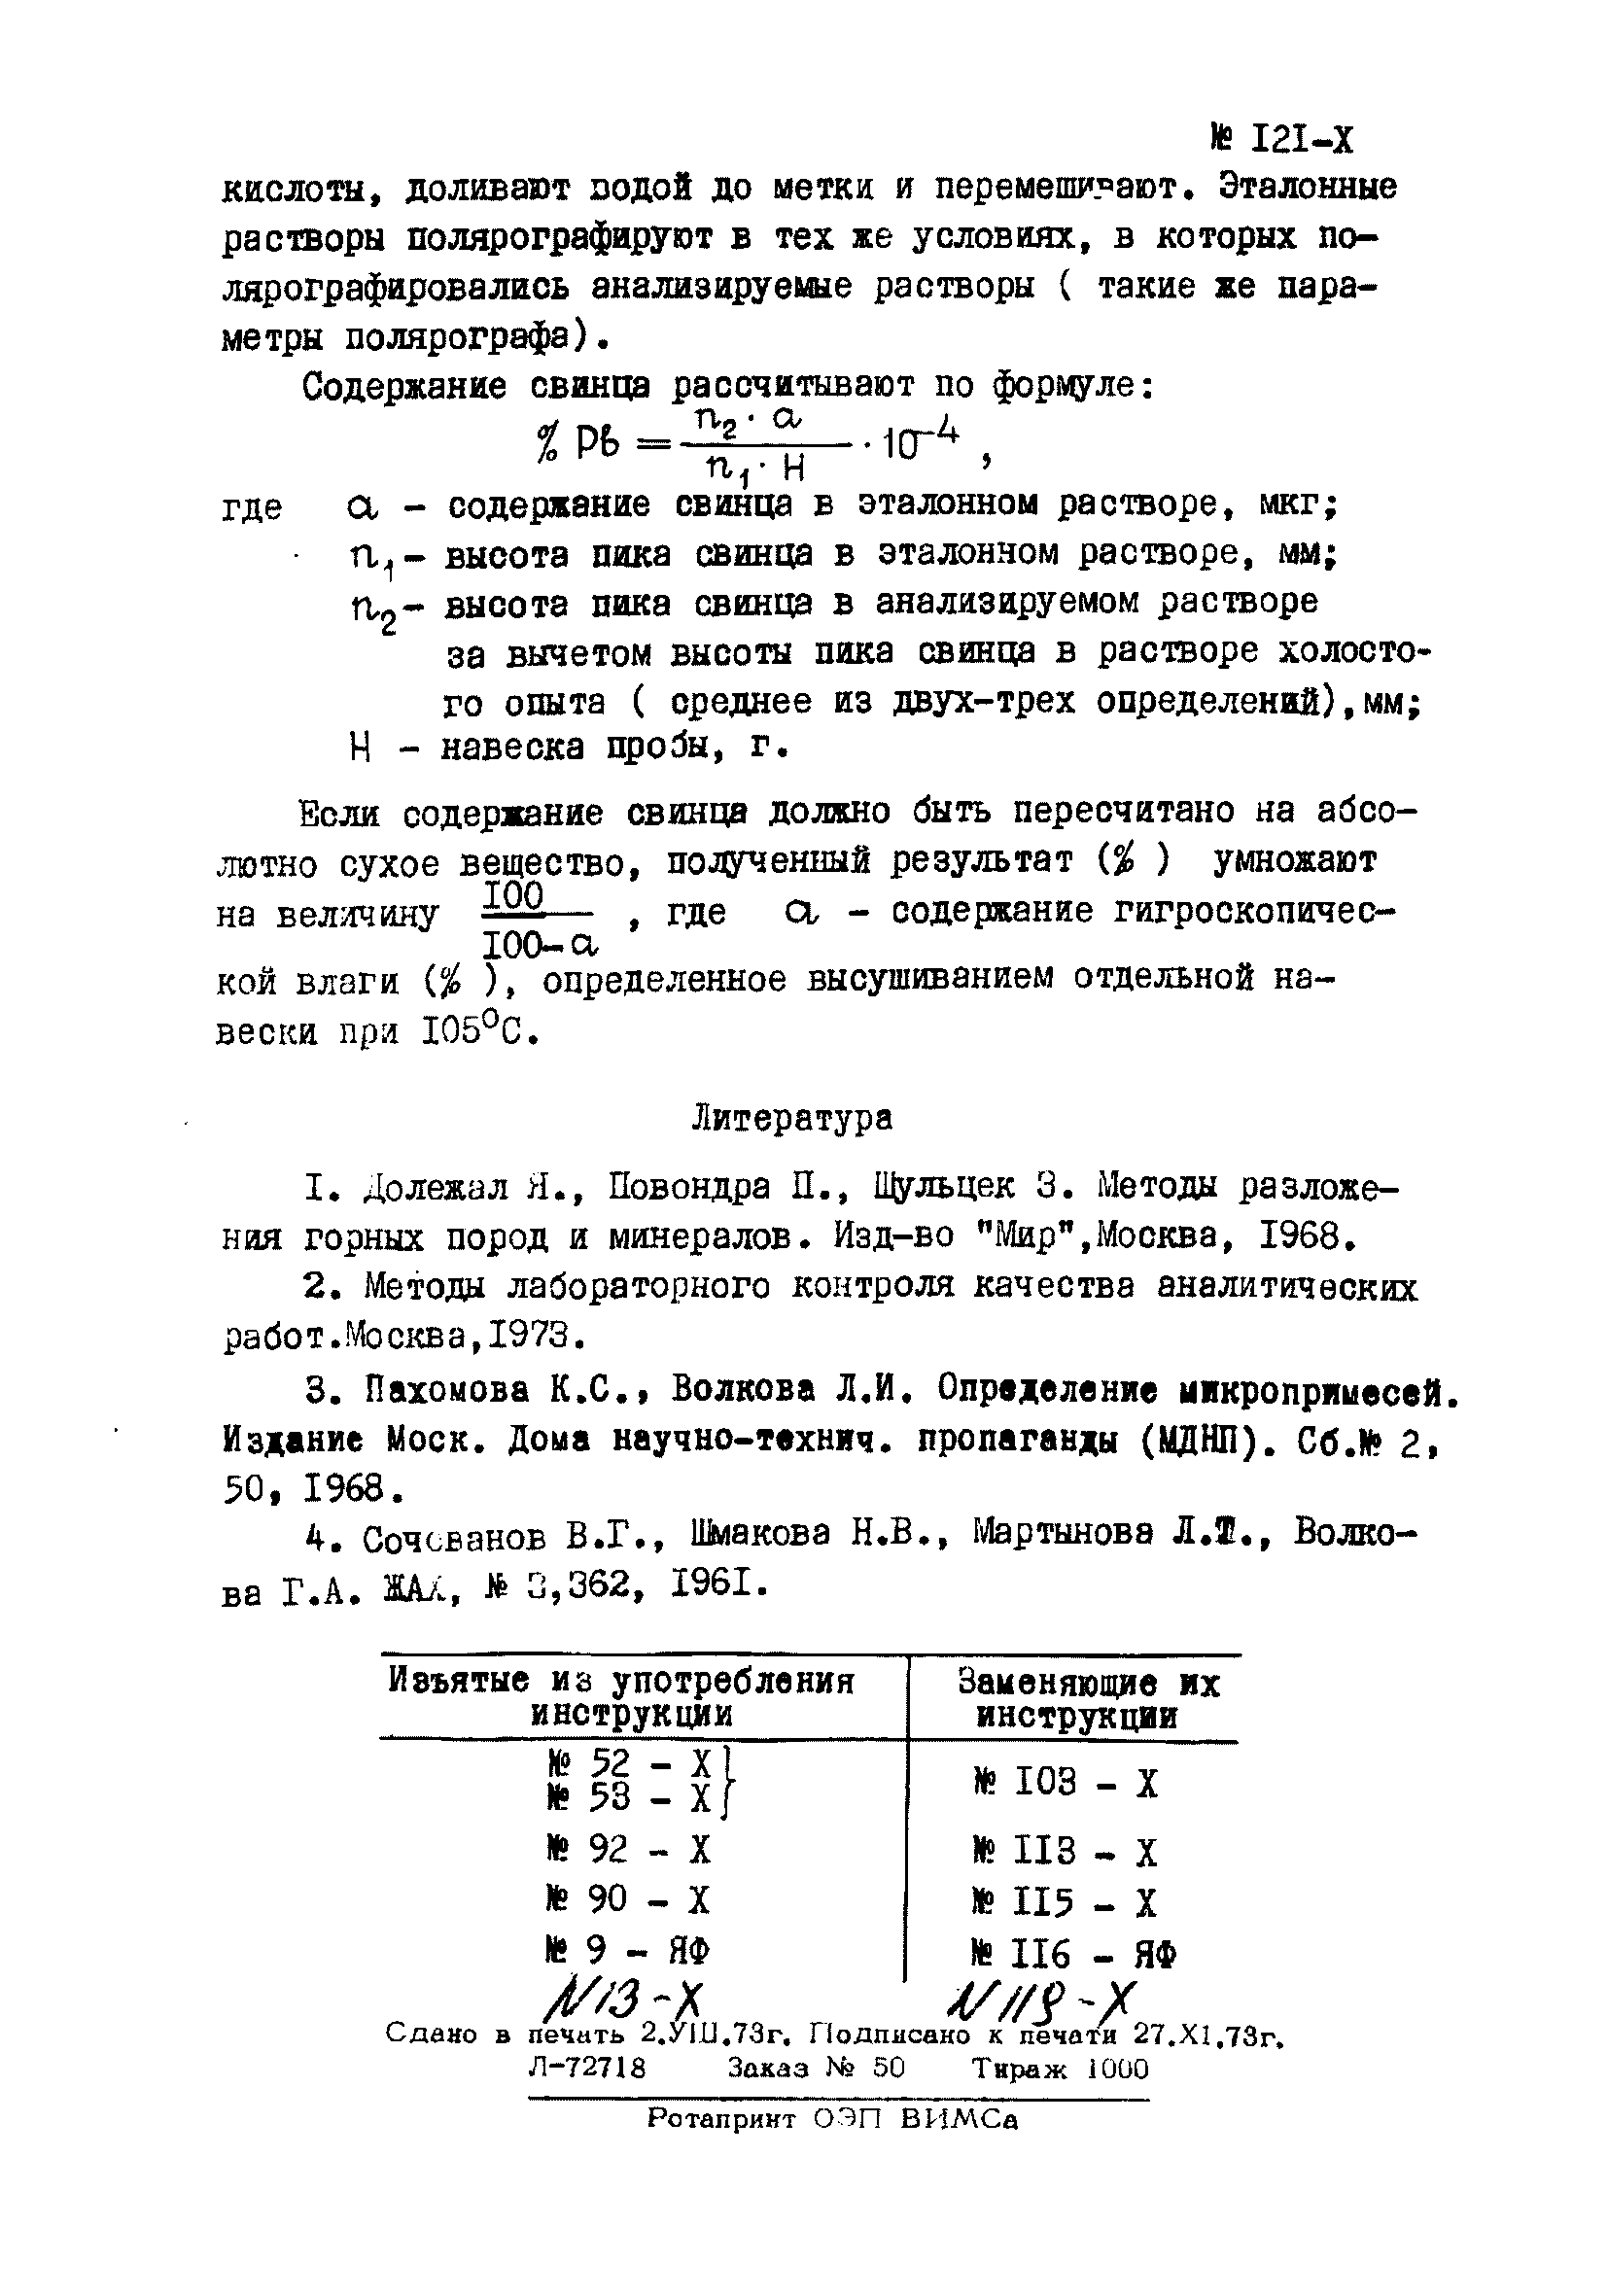 Инструкция НСАМ 121-Х